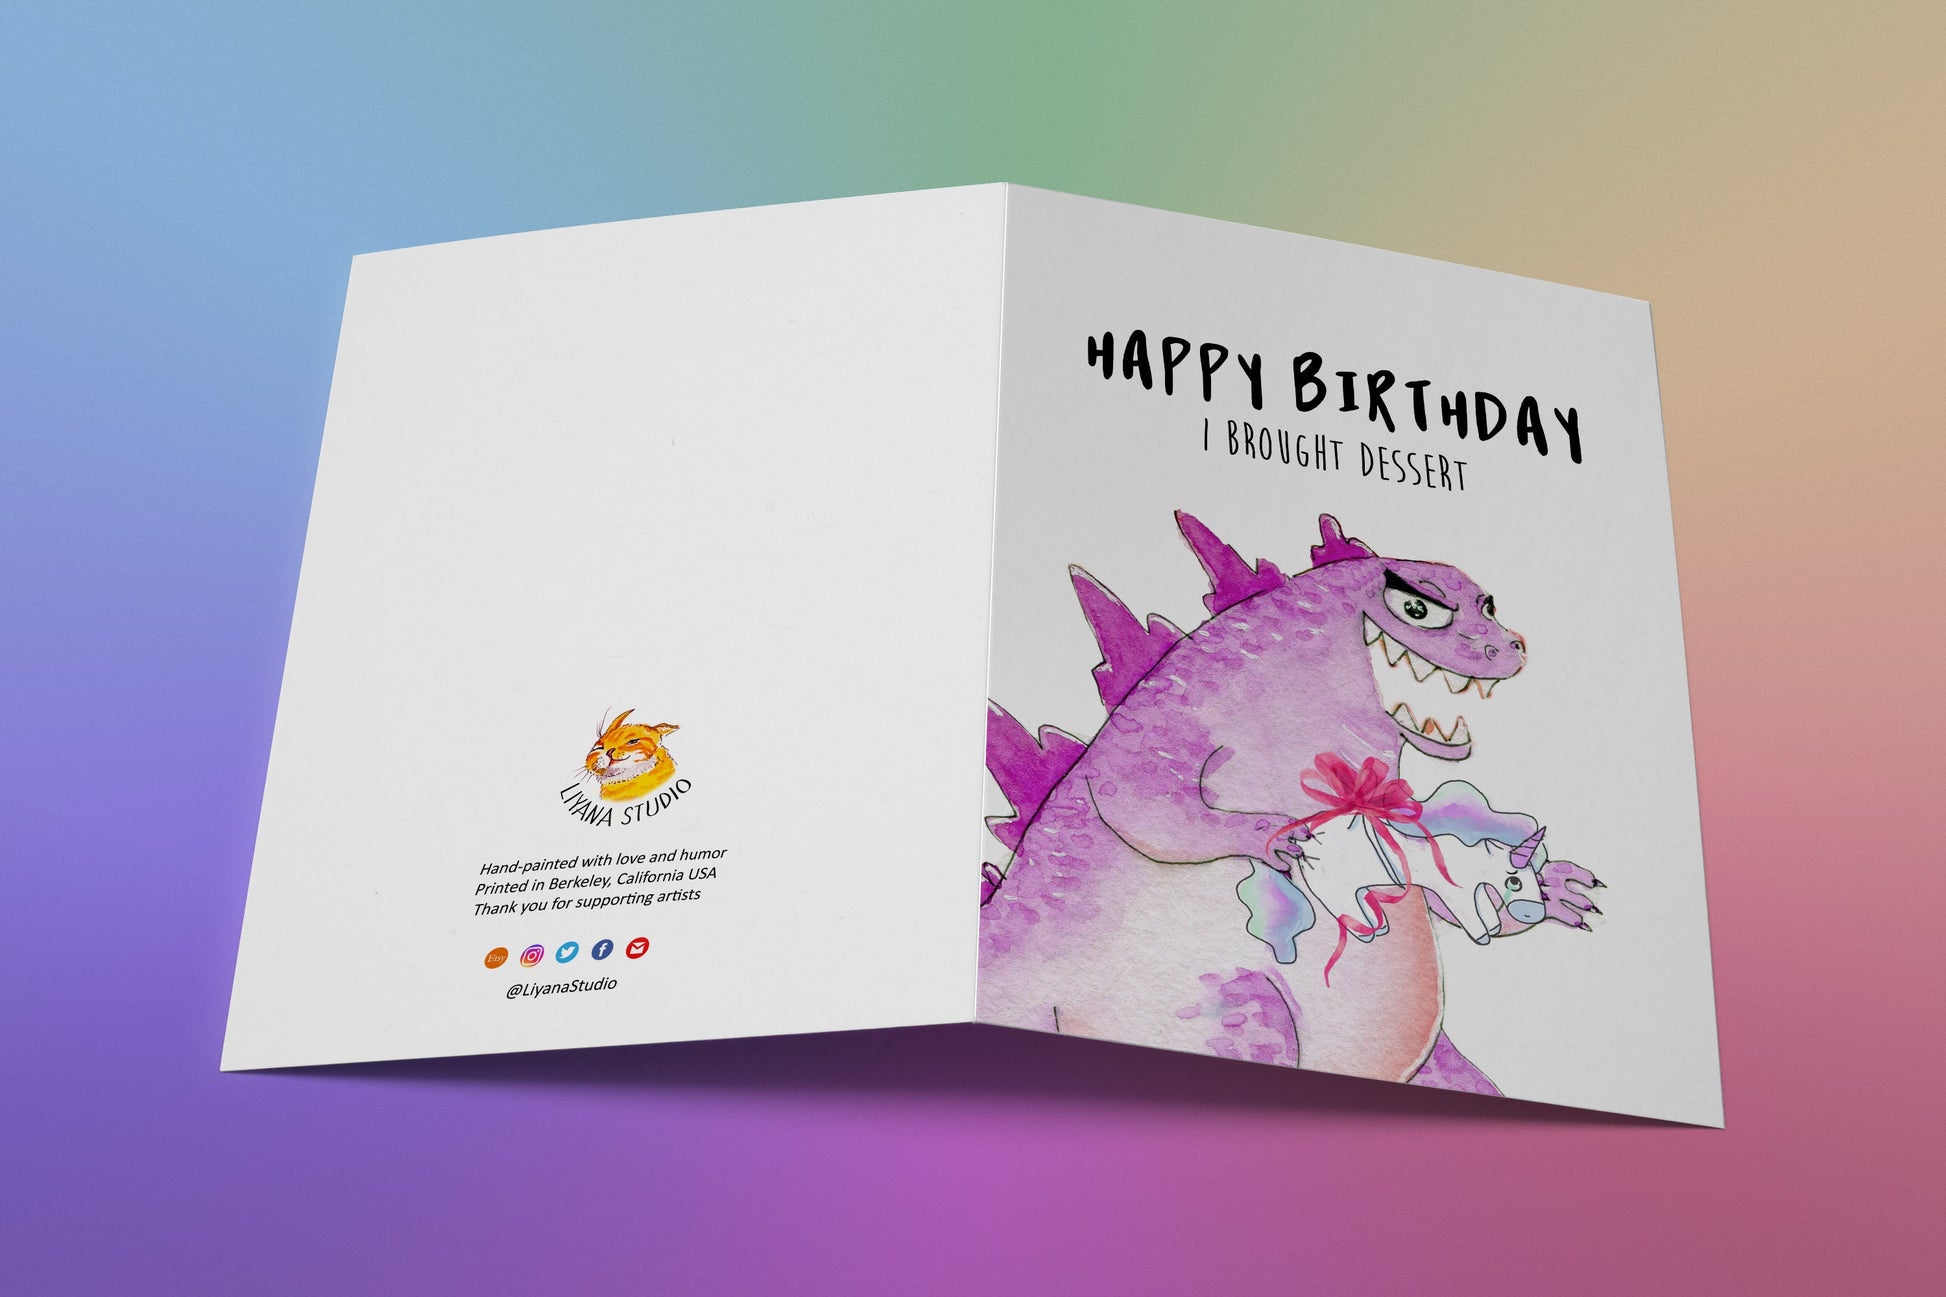 Godzilla Birthday Card Funny Unicorn Birthday Gifts